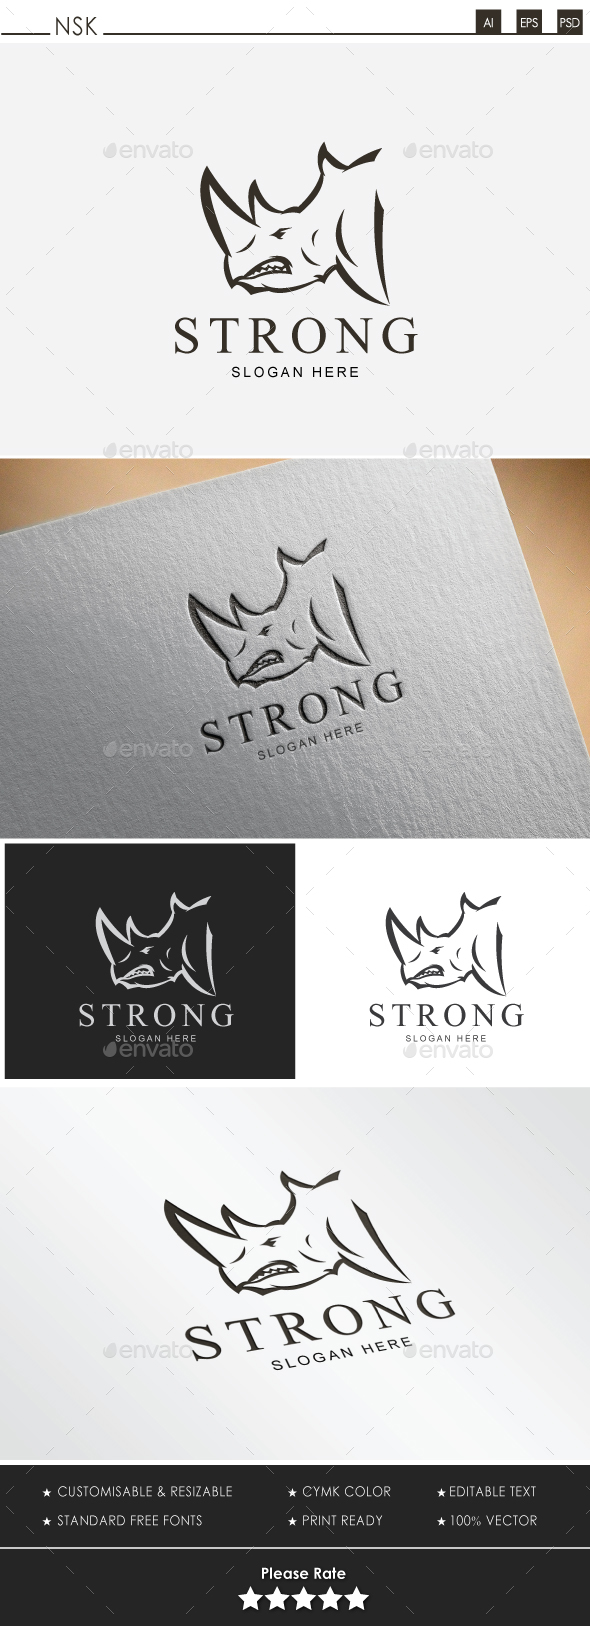 Rhino Logo Design